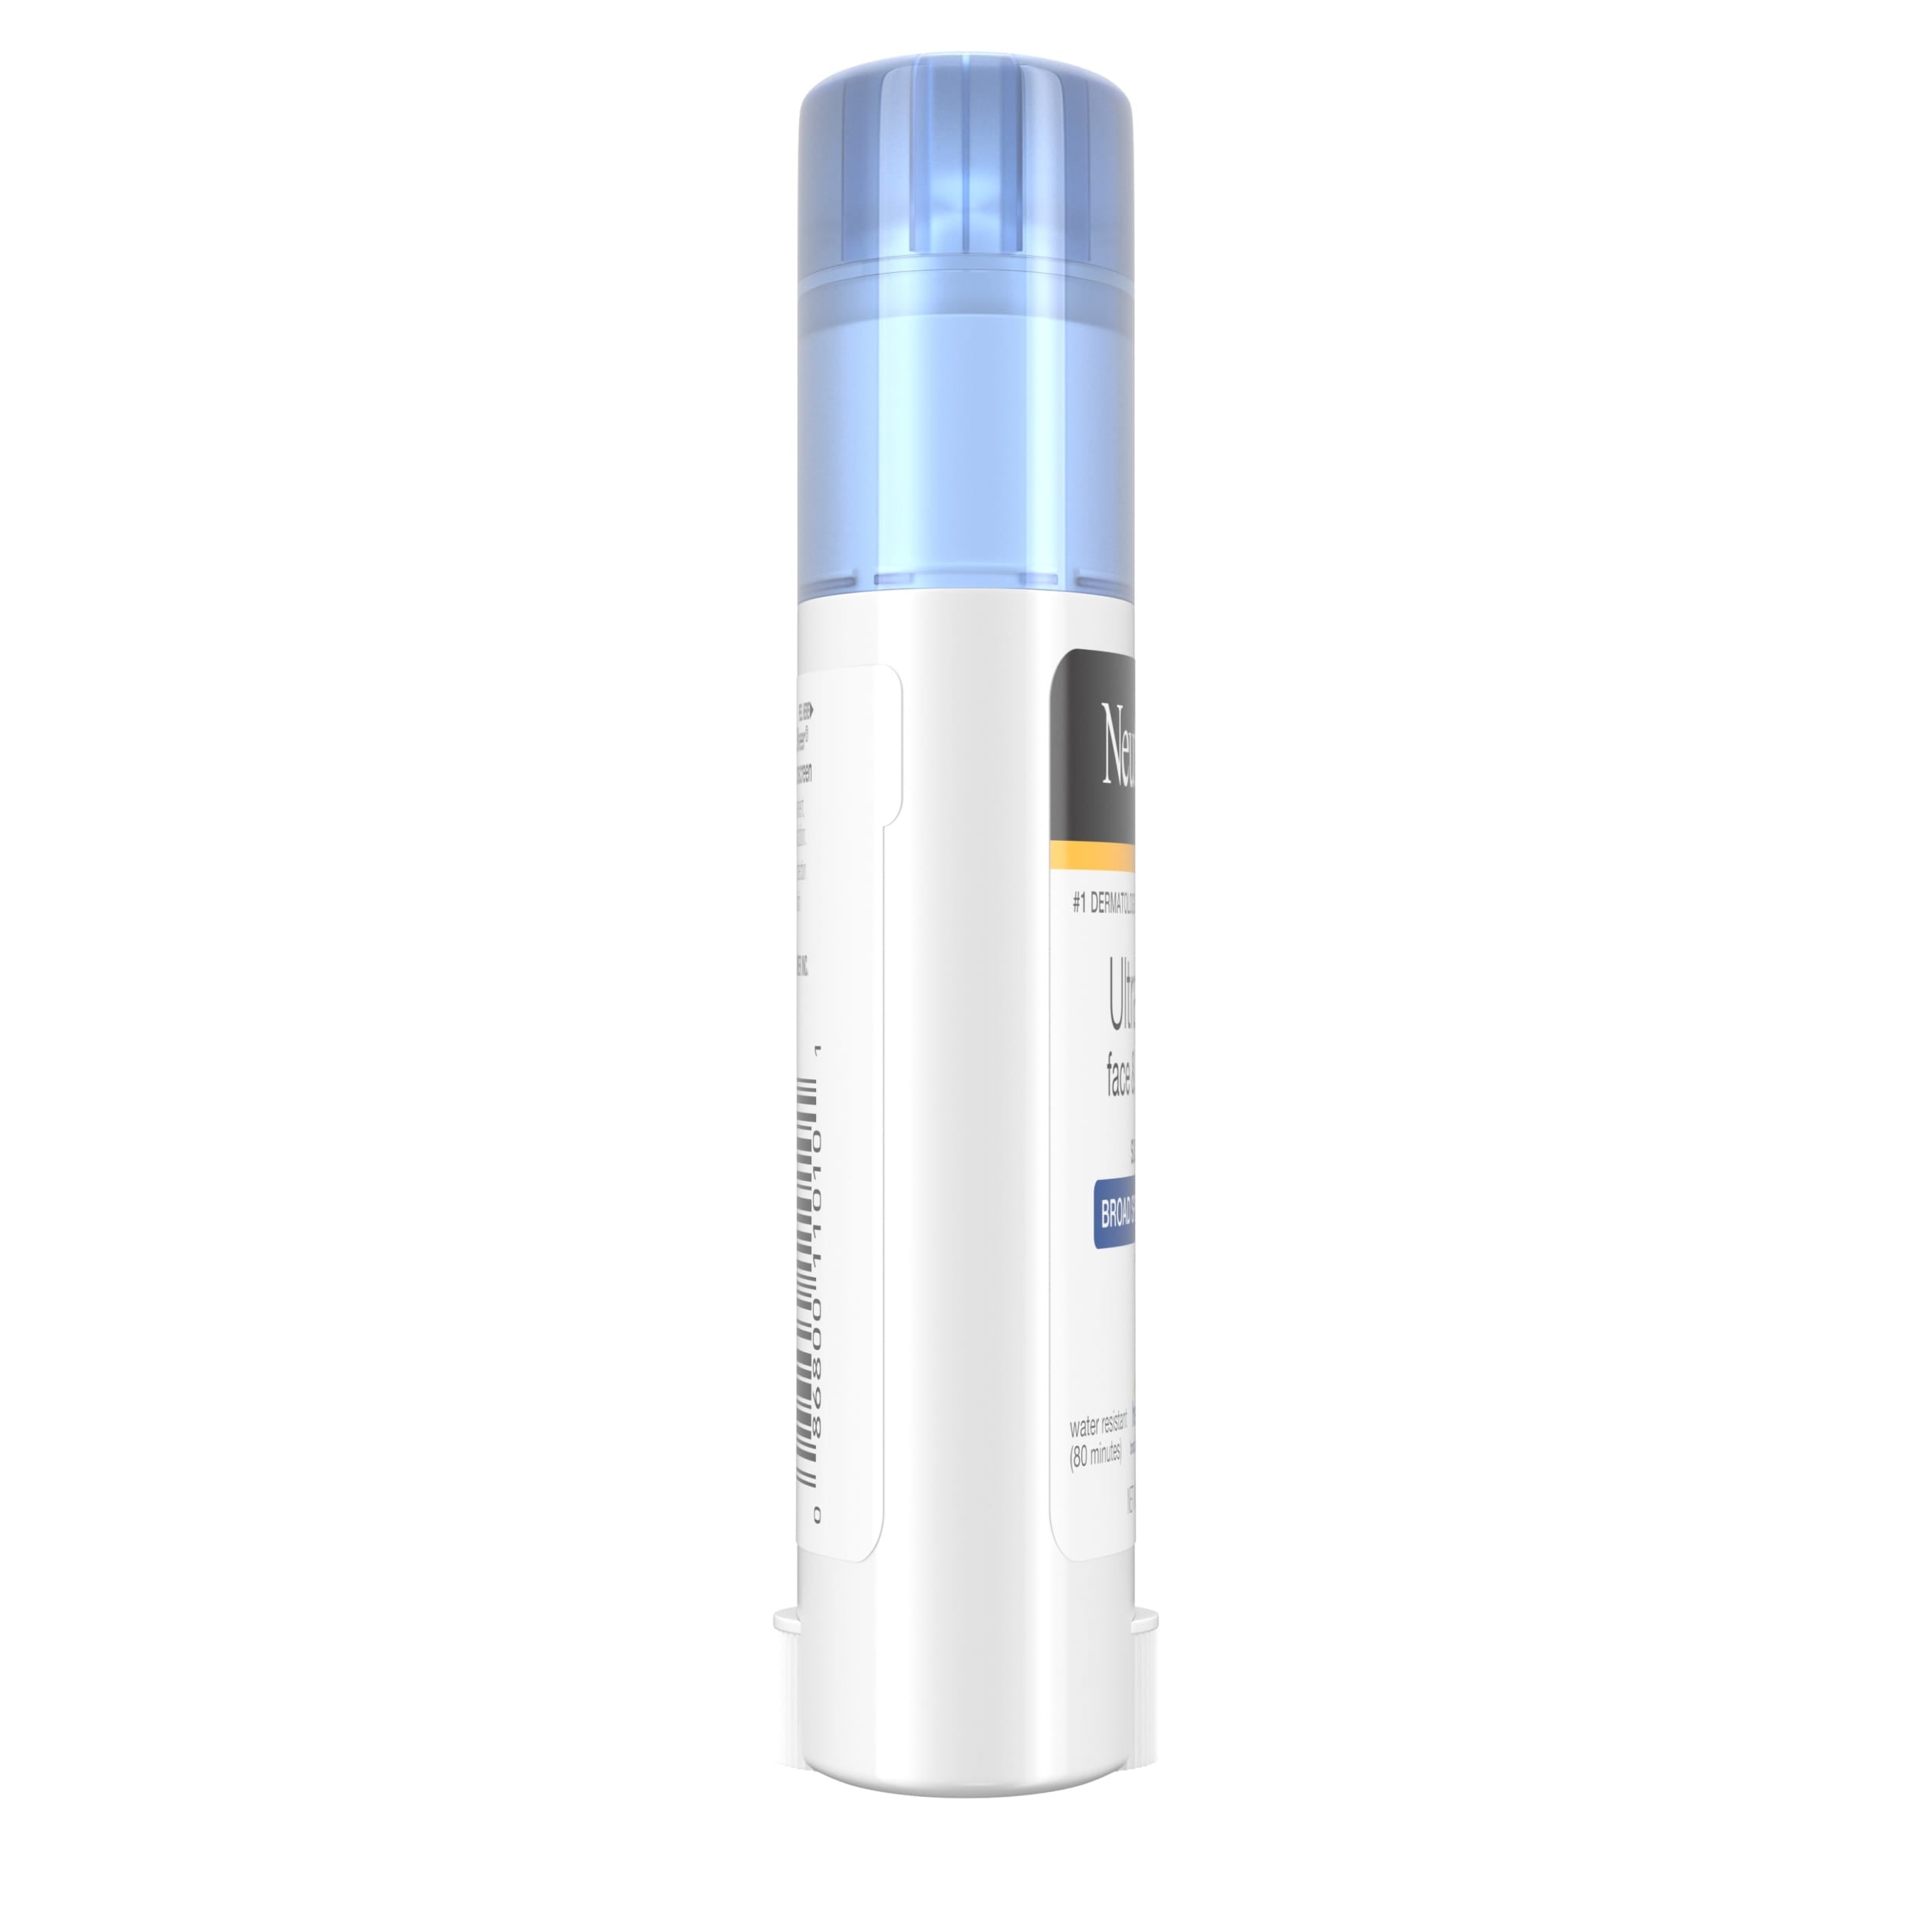 Neutrogena Ultra Sheer Non-Greasy Sunscreen Stick, SPF 70, 1.5 oz